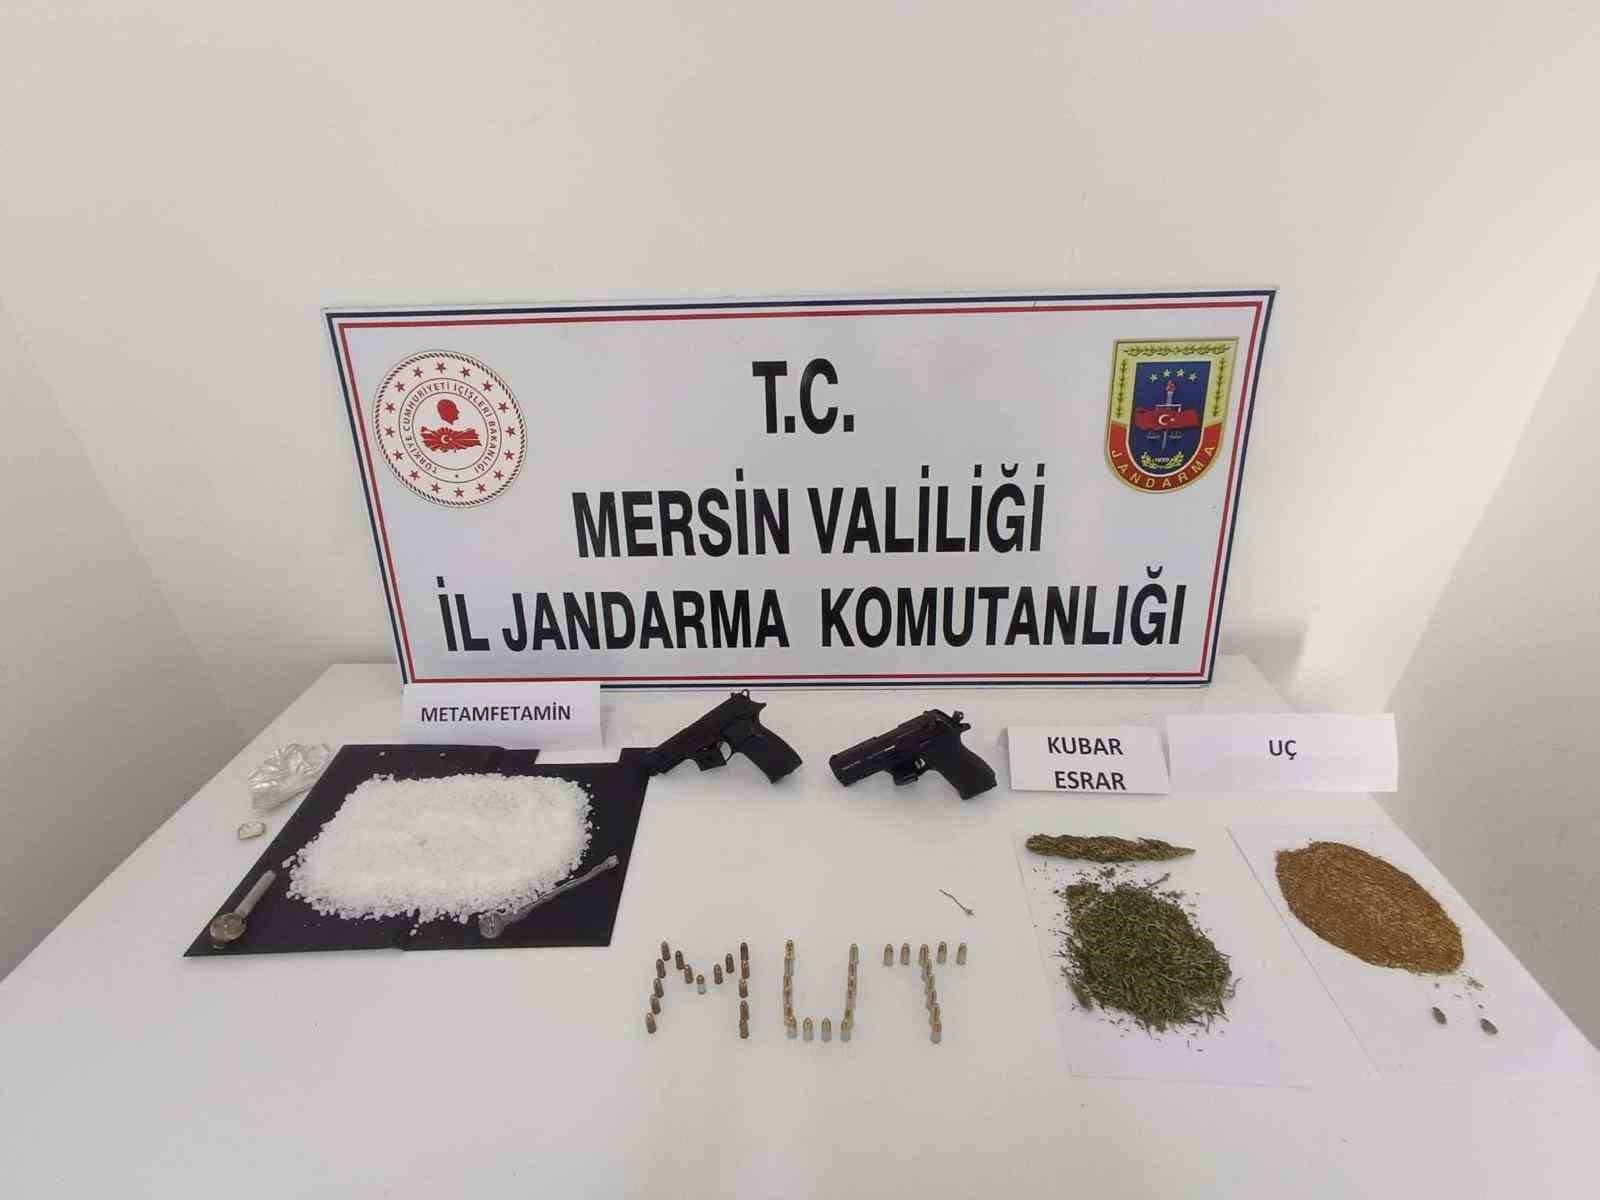 Mersin’de uyuşturucu operasyonu: 3 tutuklama